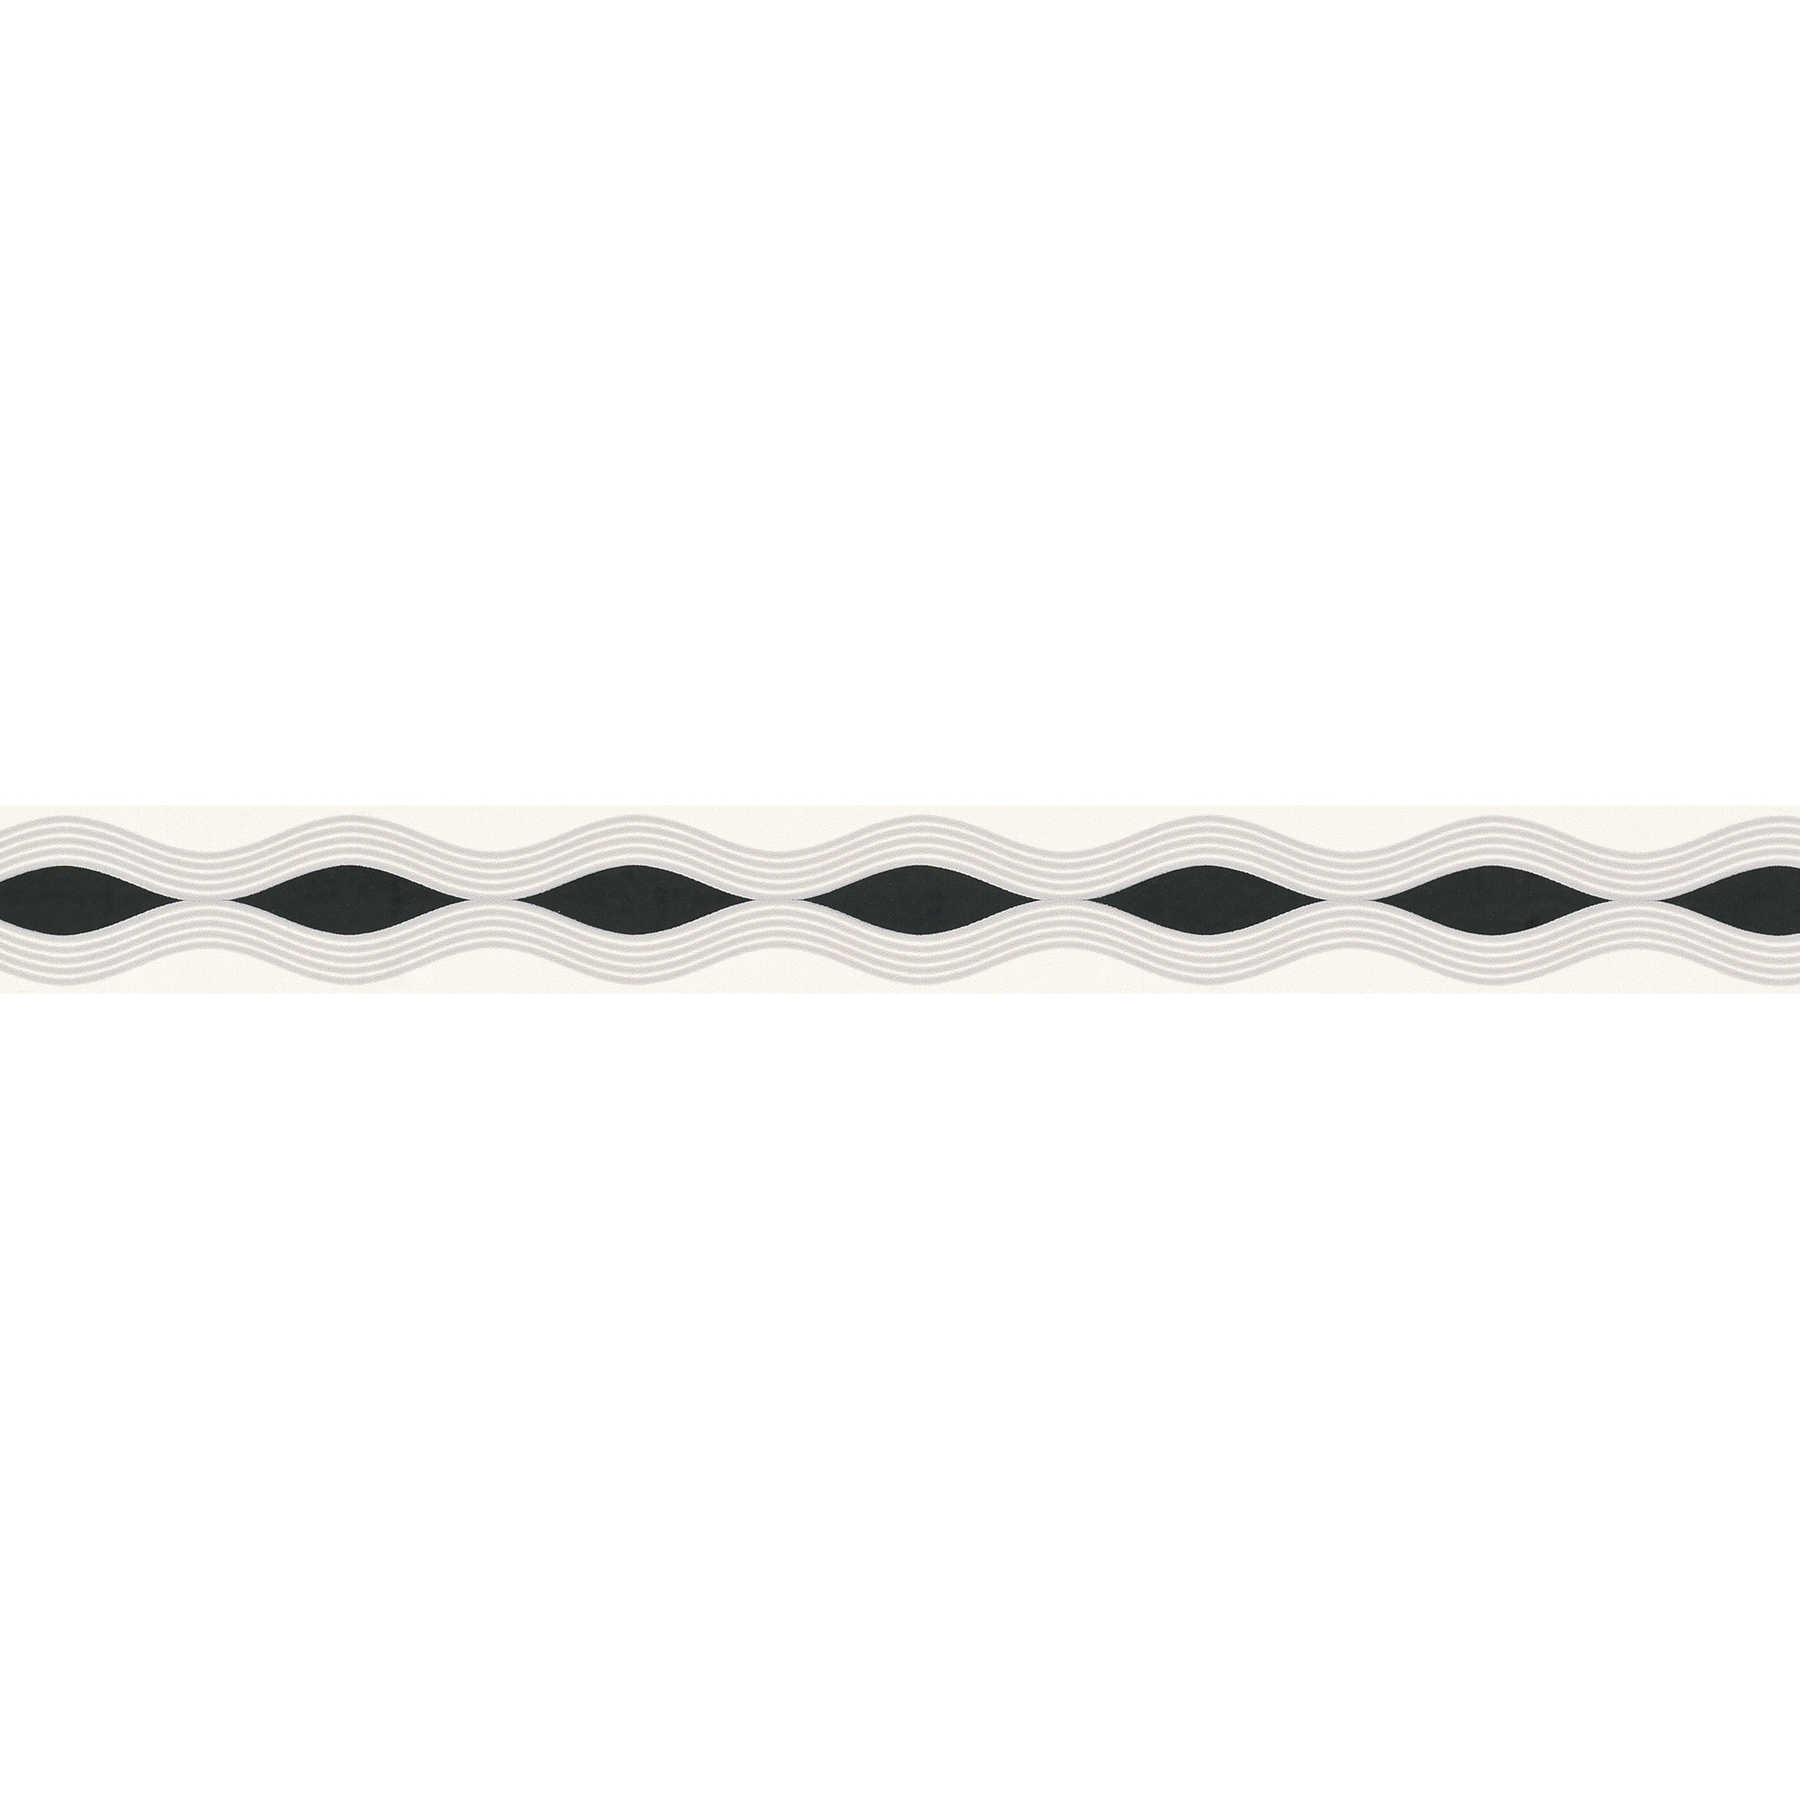         Braid graphic pattern, line design in retro style - black, grey, white
    